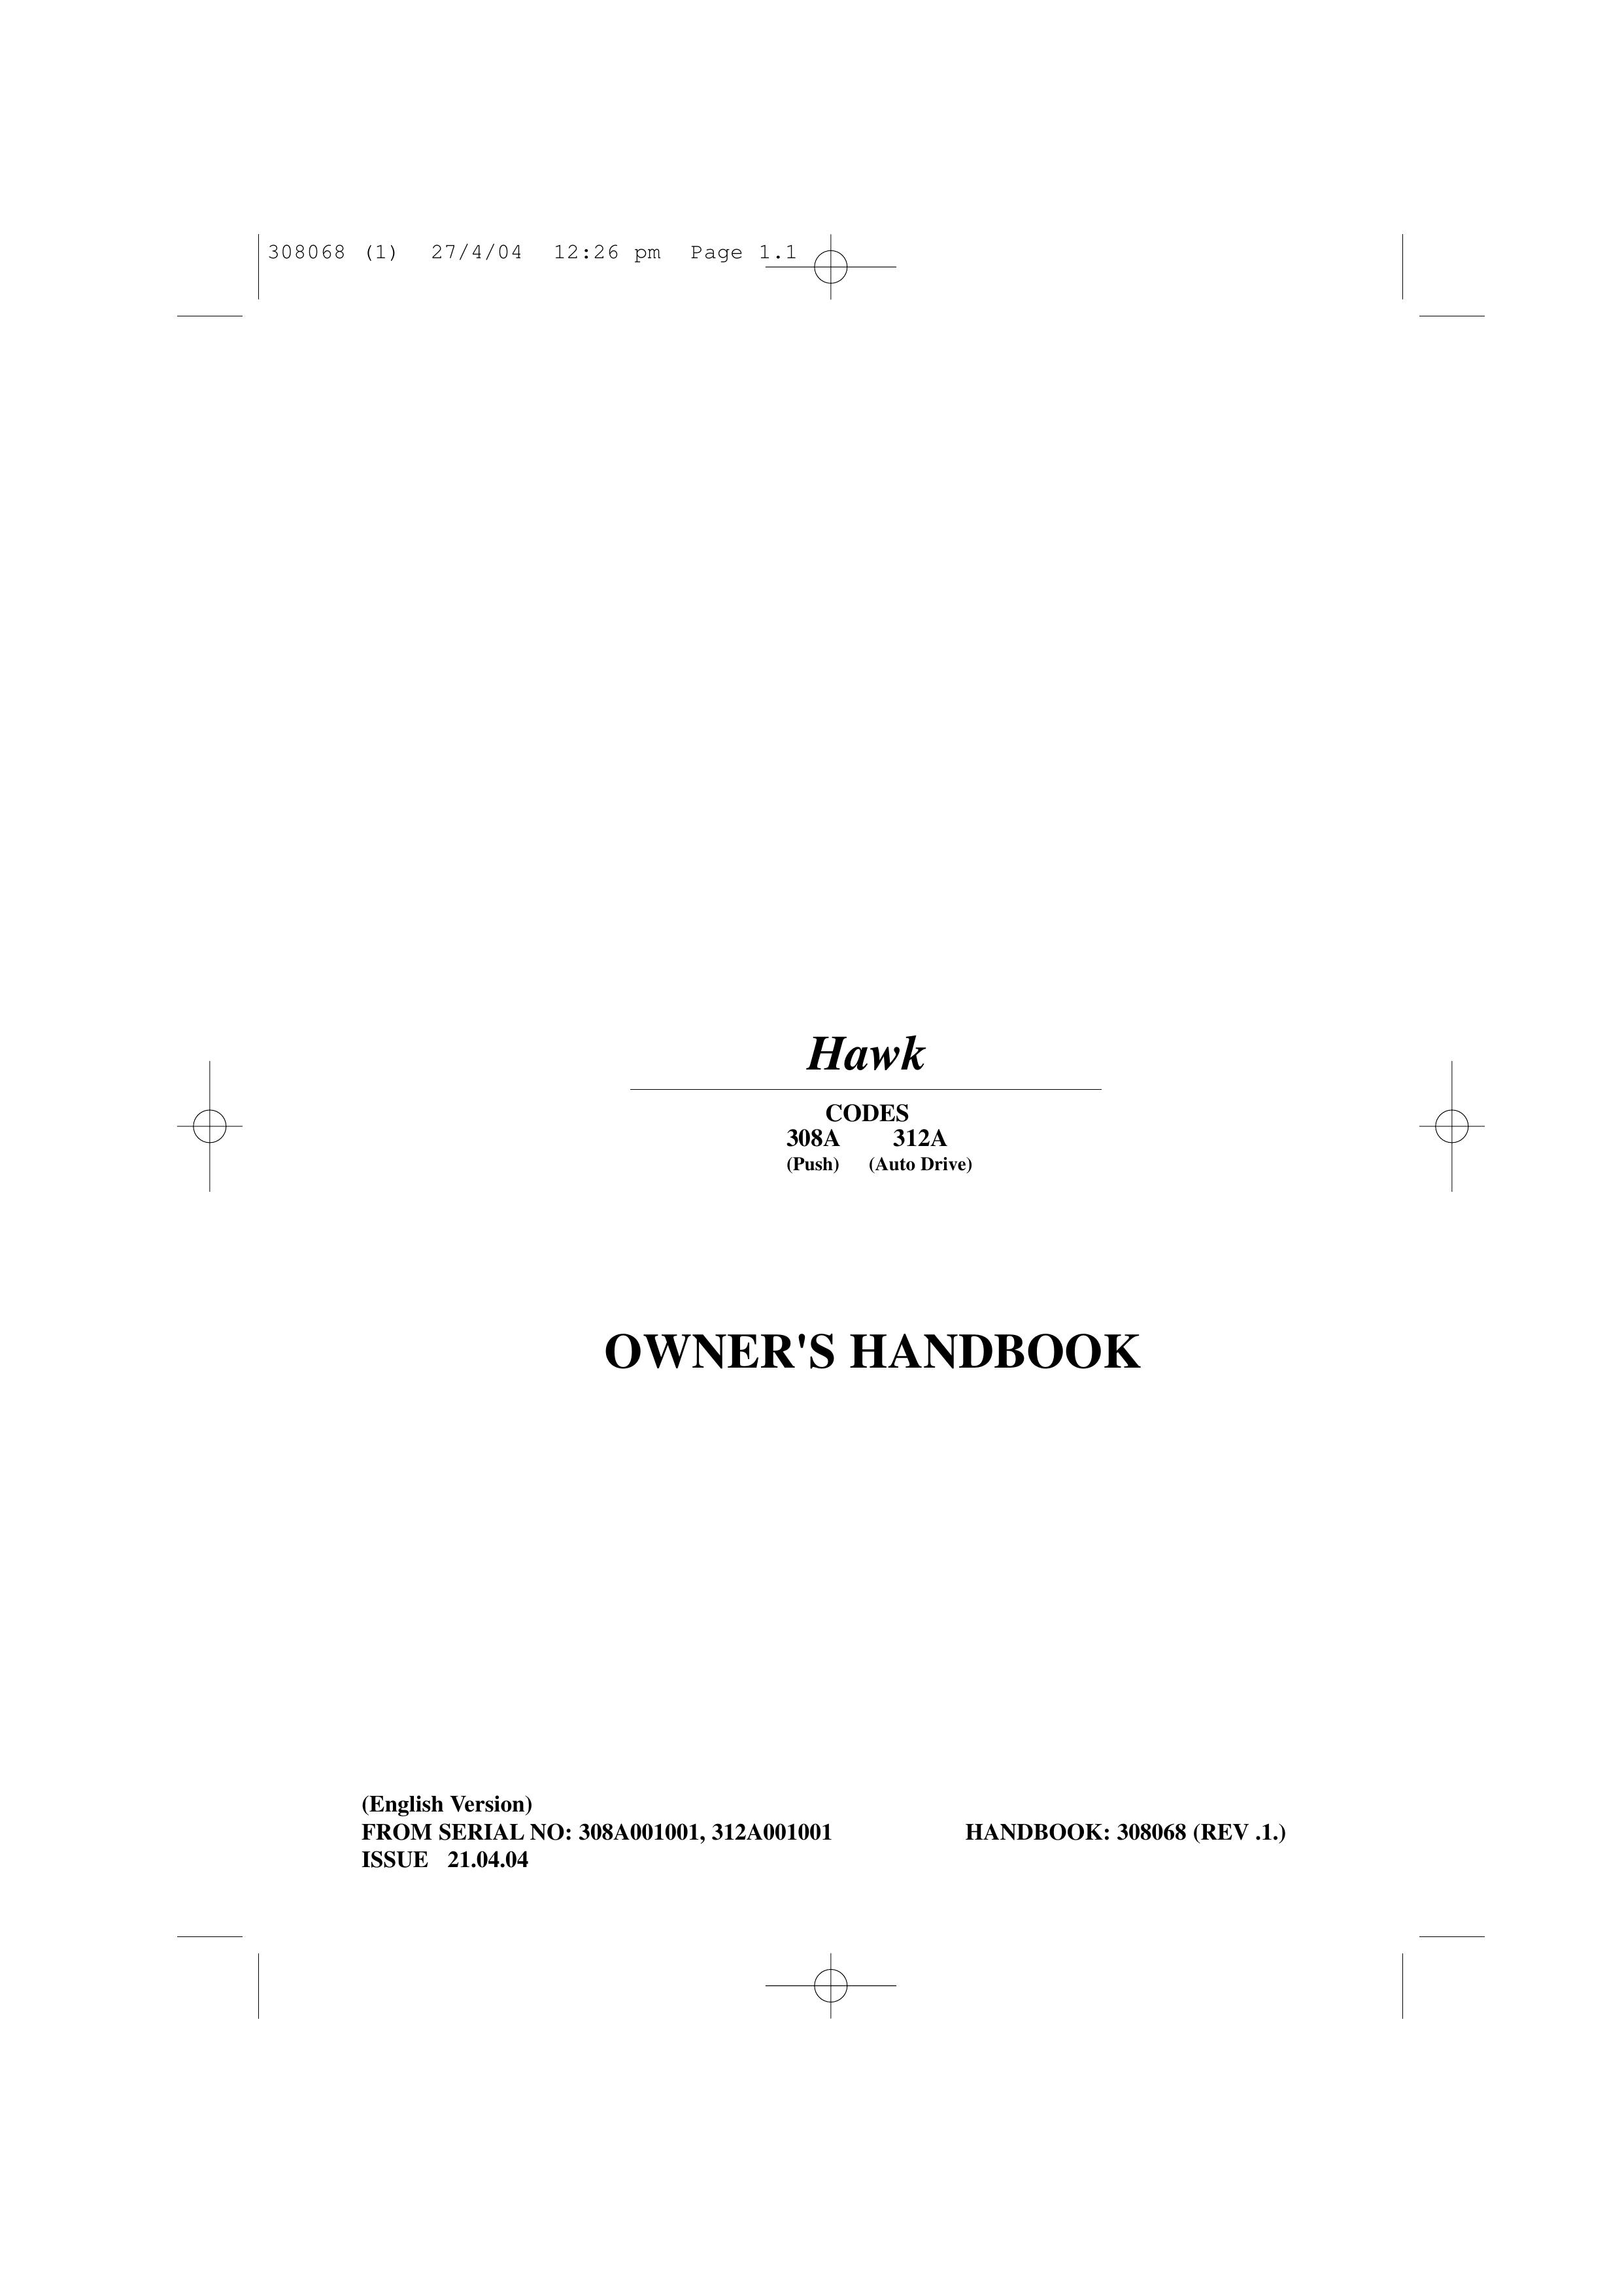 Hayter Mowers 308A Lawn Mower User Manual